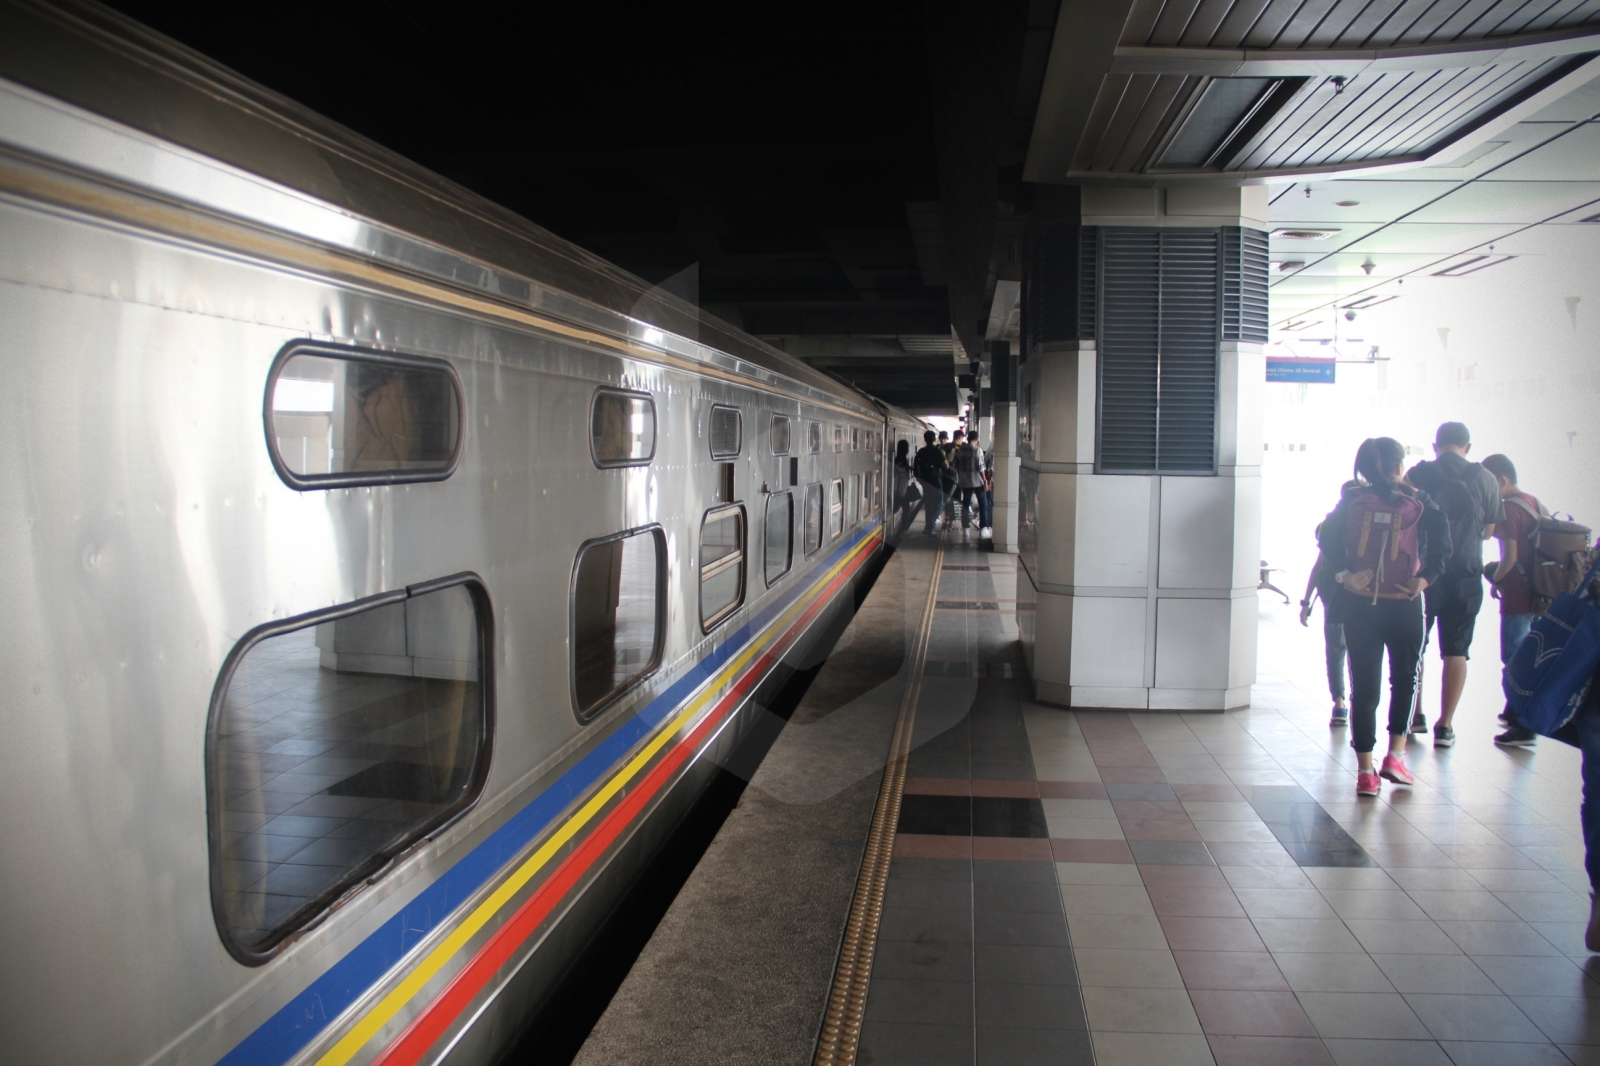 Tumpat and Kota Bharu to Johor Bahru by train